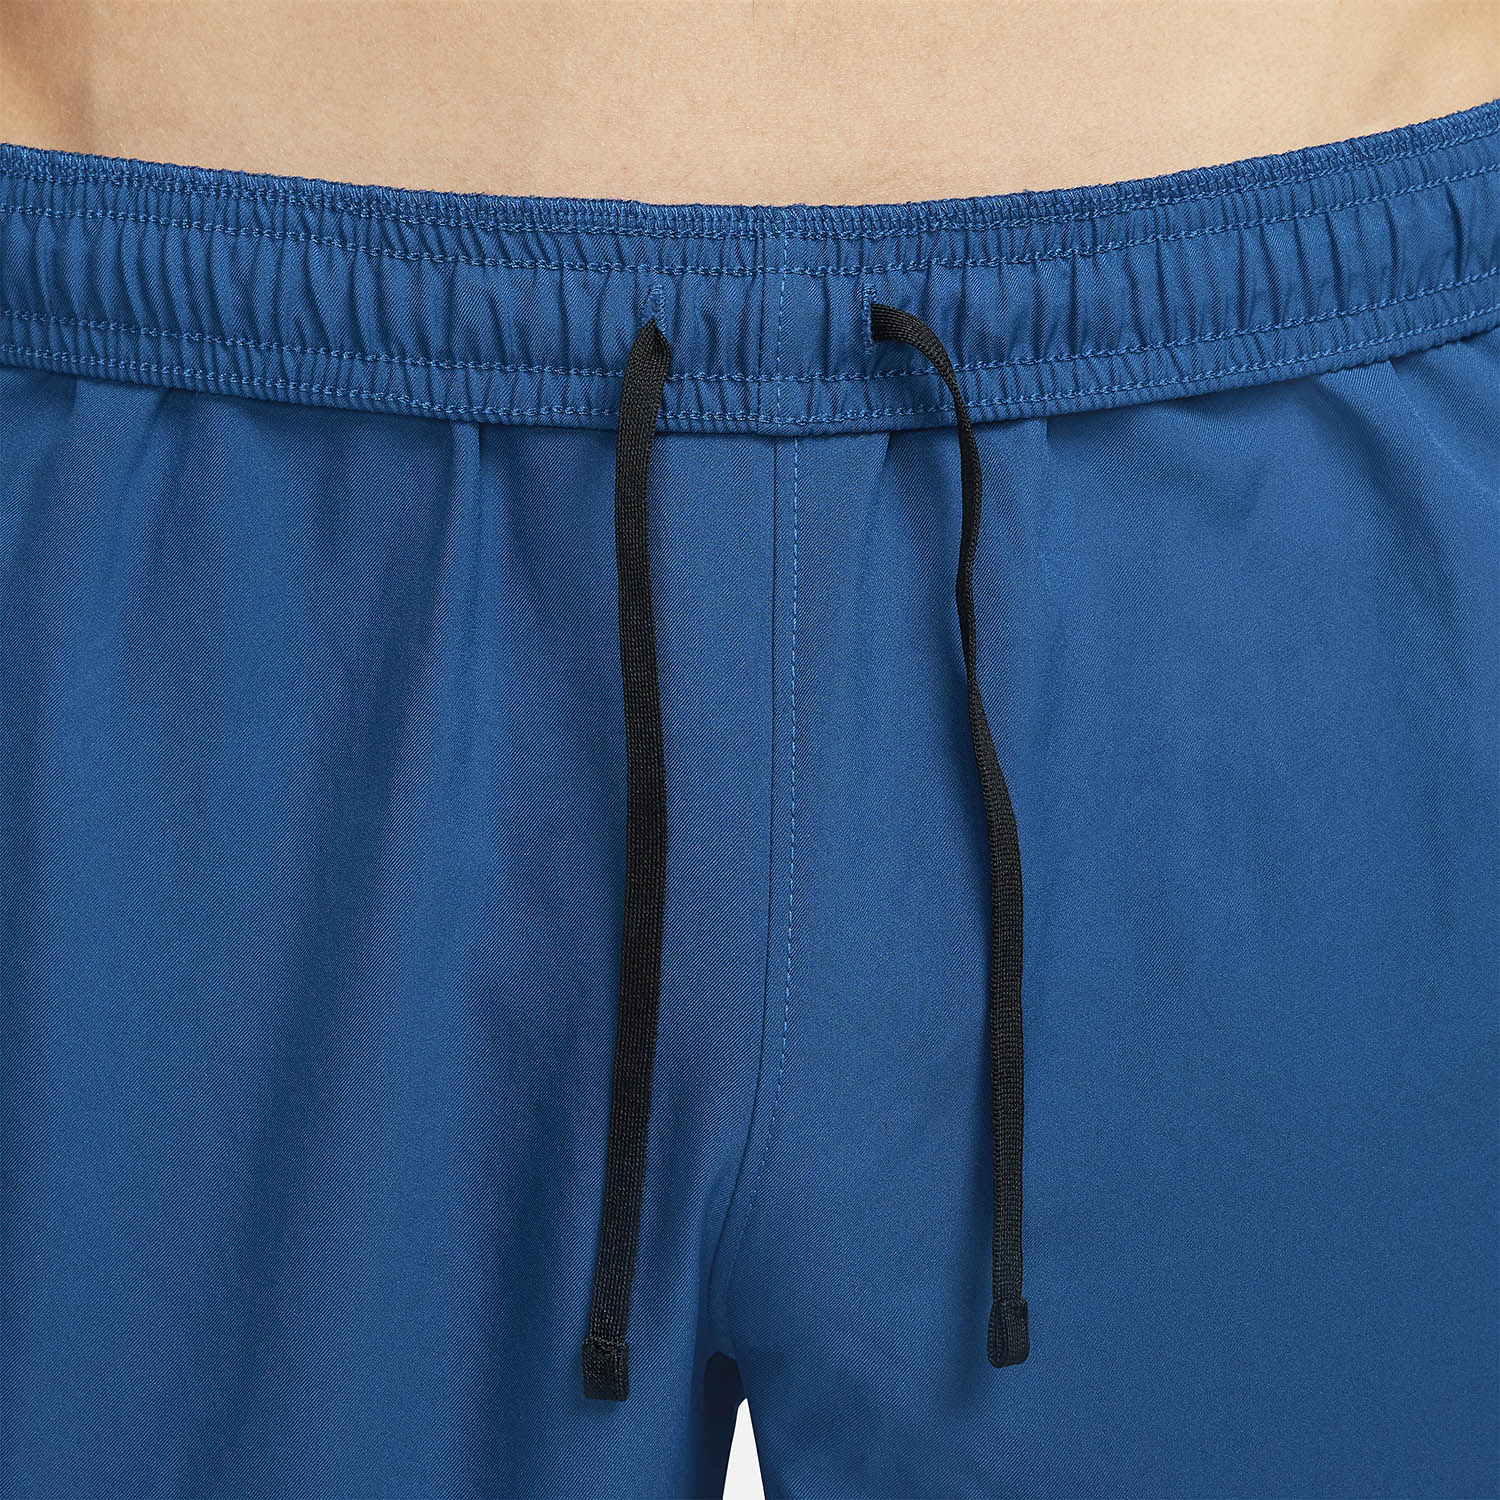 Nike Challenger Flash Men's Running Pants - Court Blue